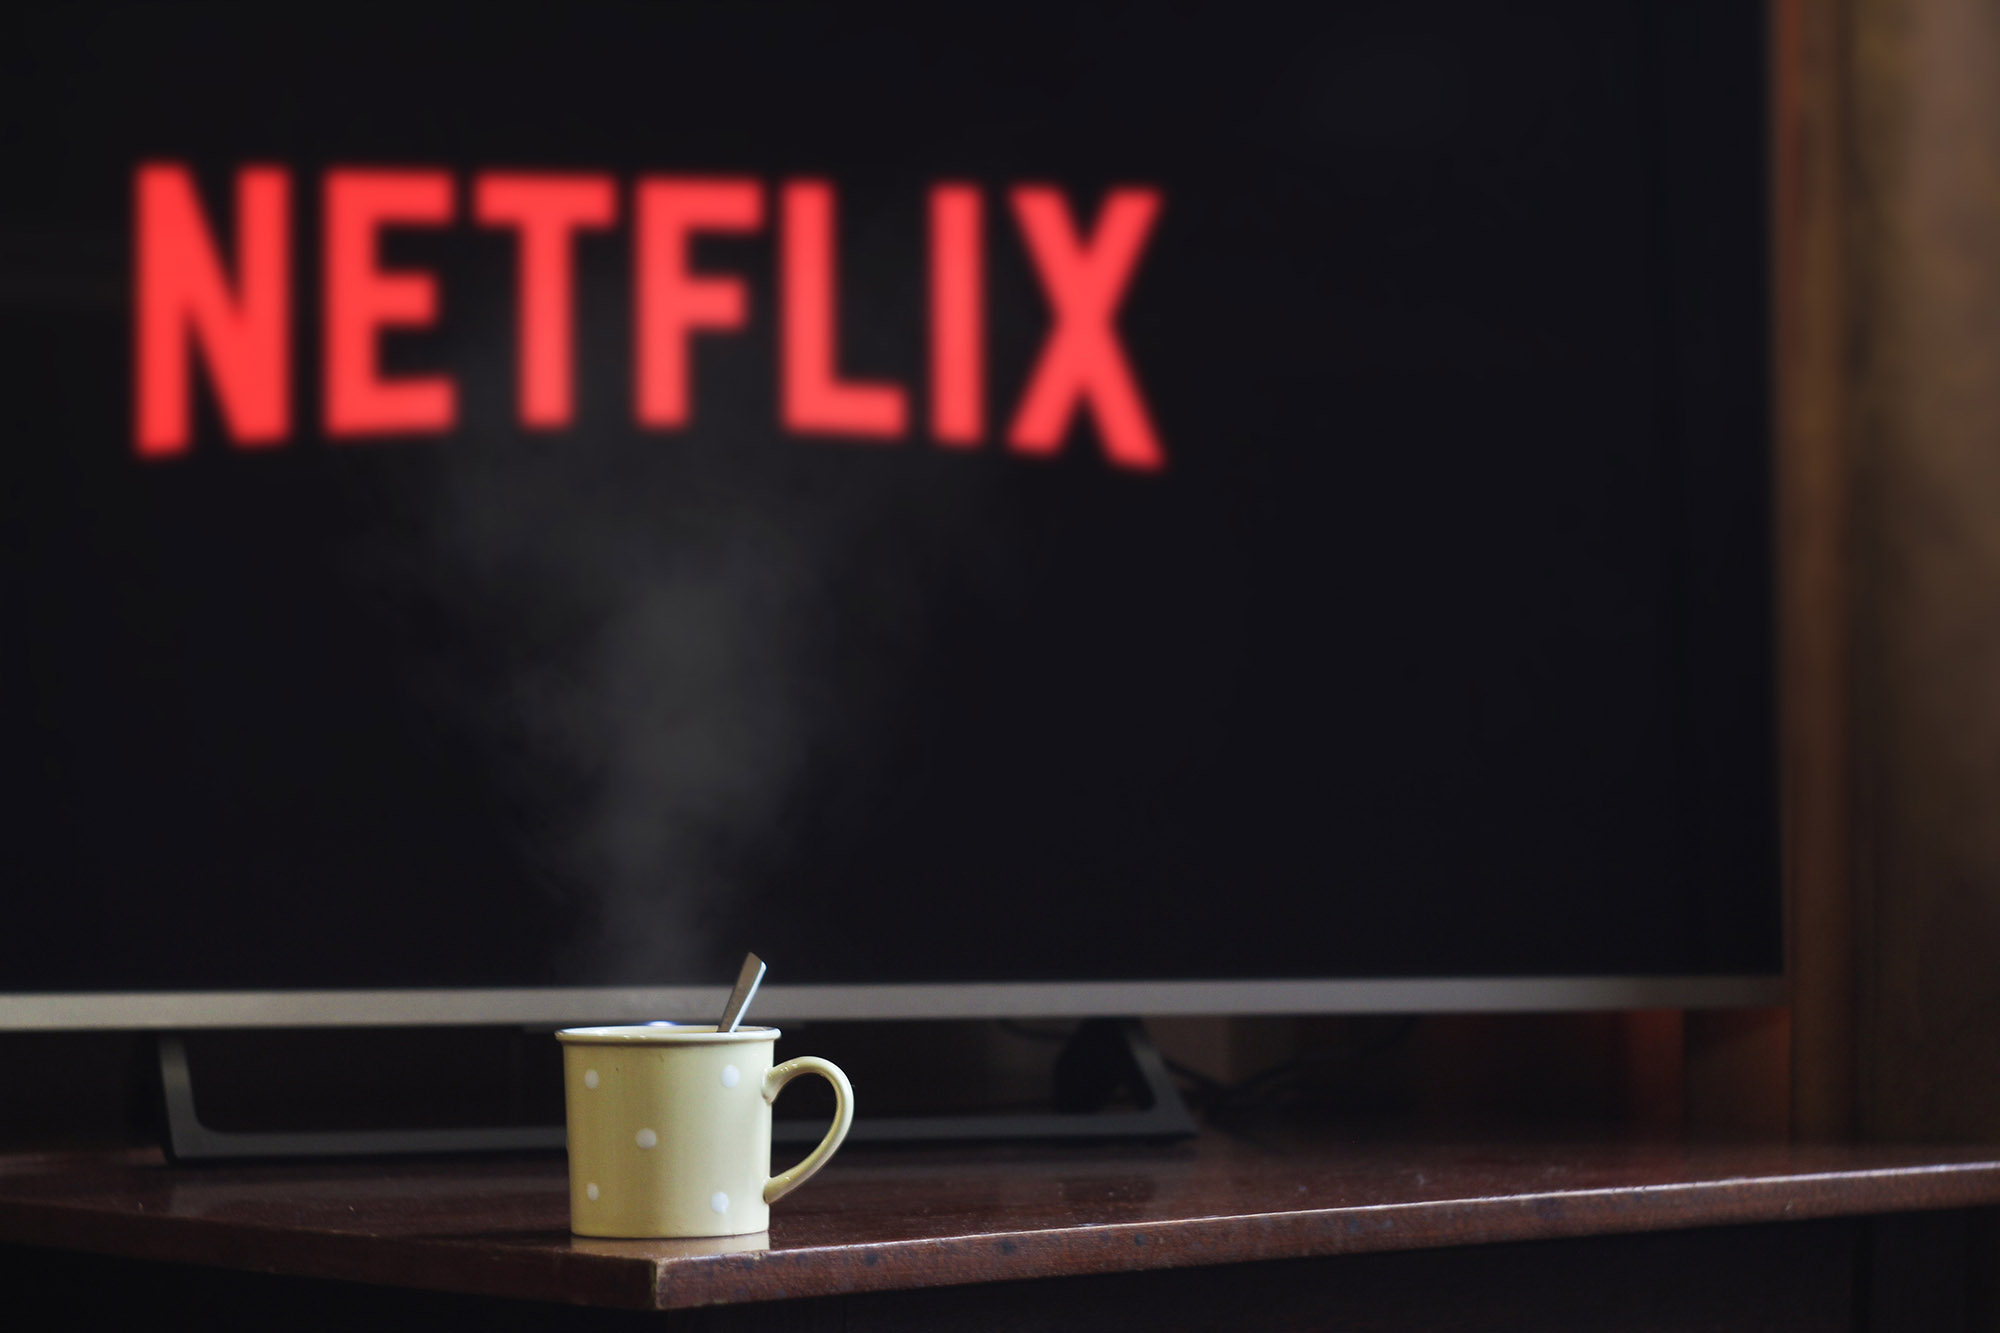 Television screen with Netflix logo behind a steaming beverage mug